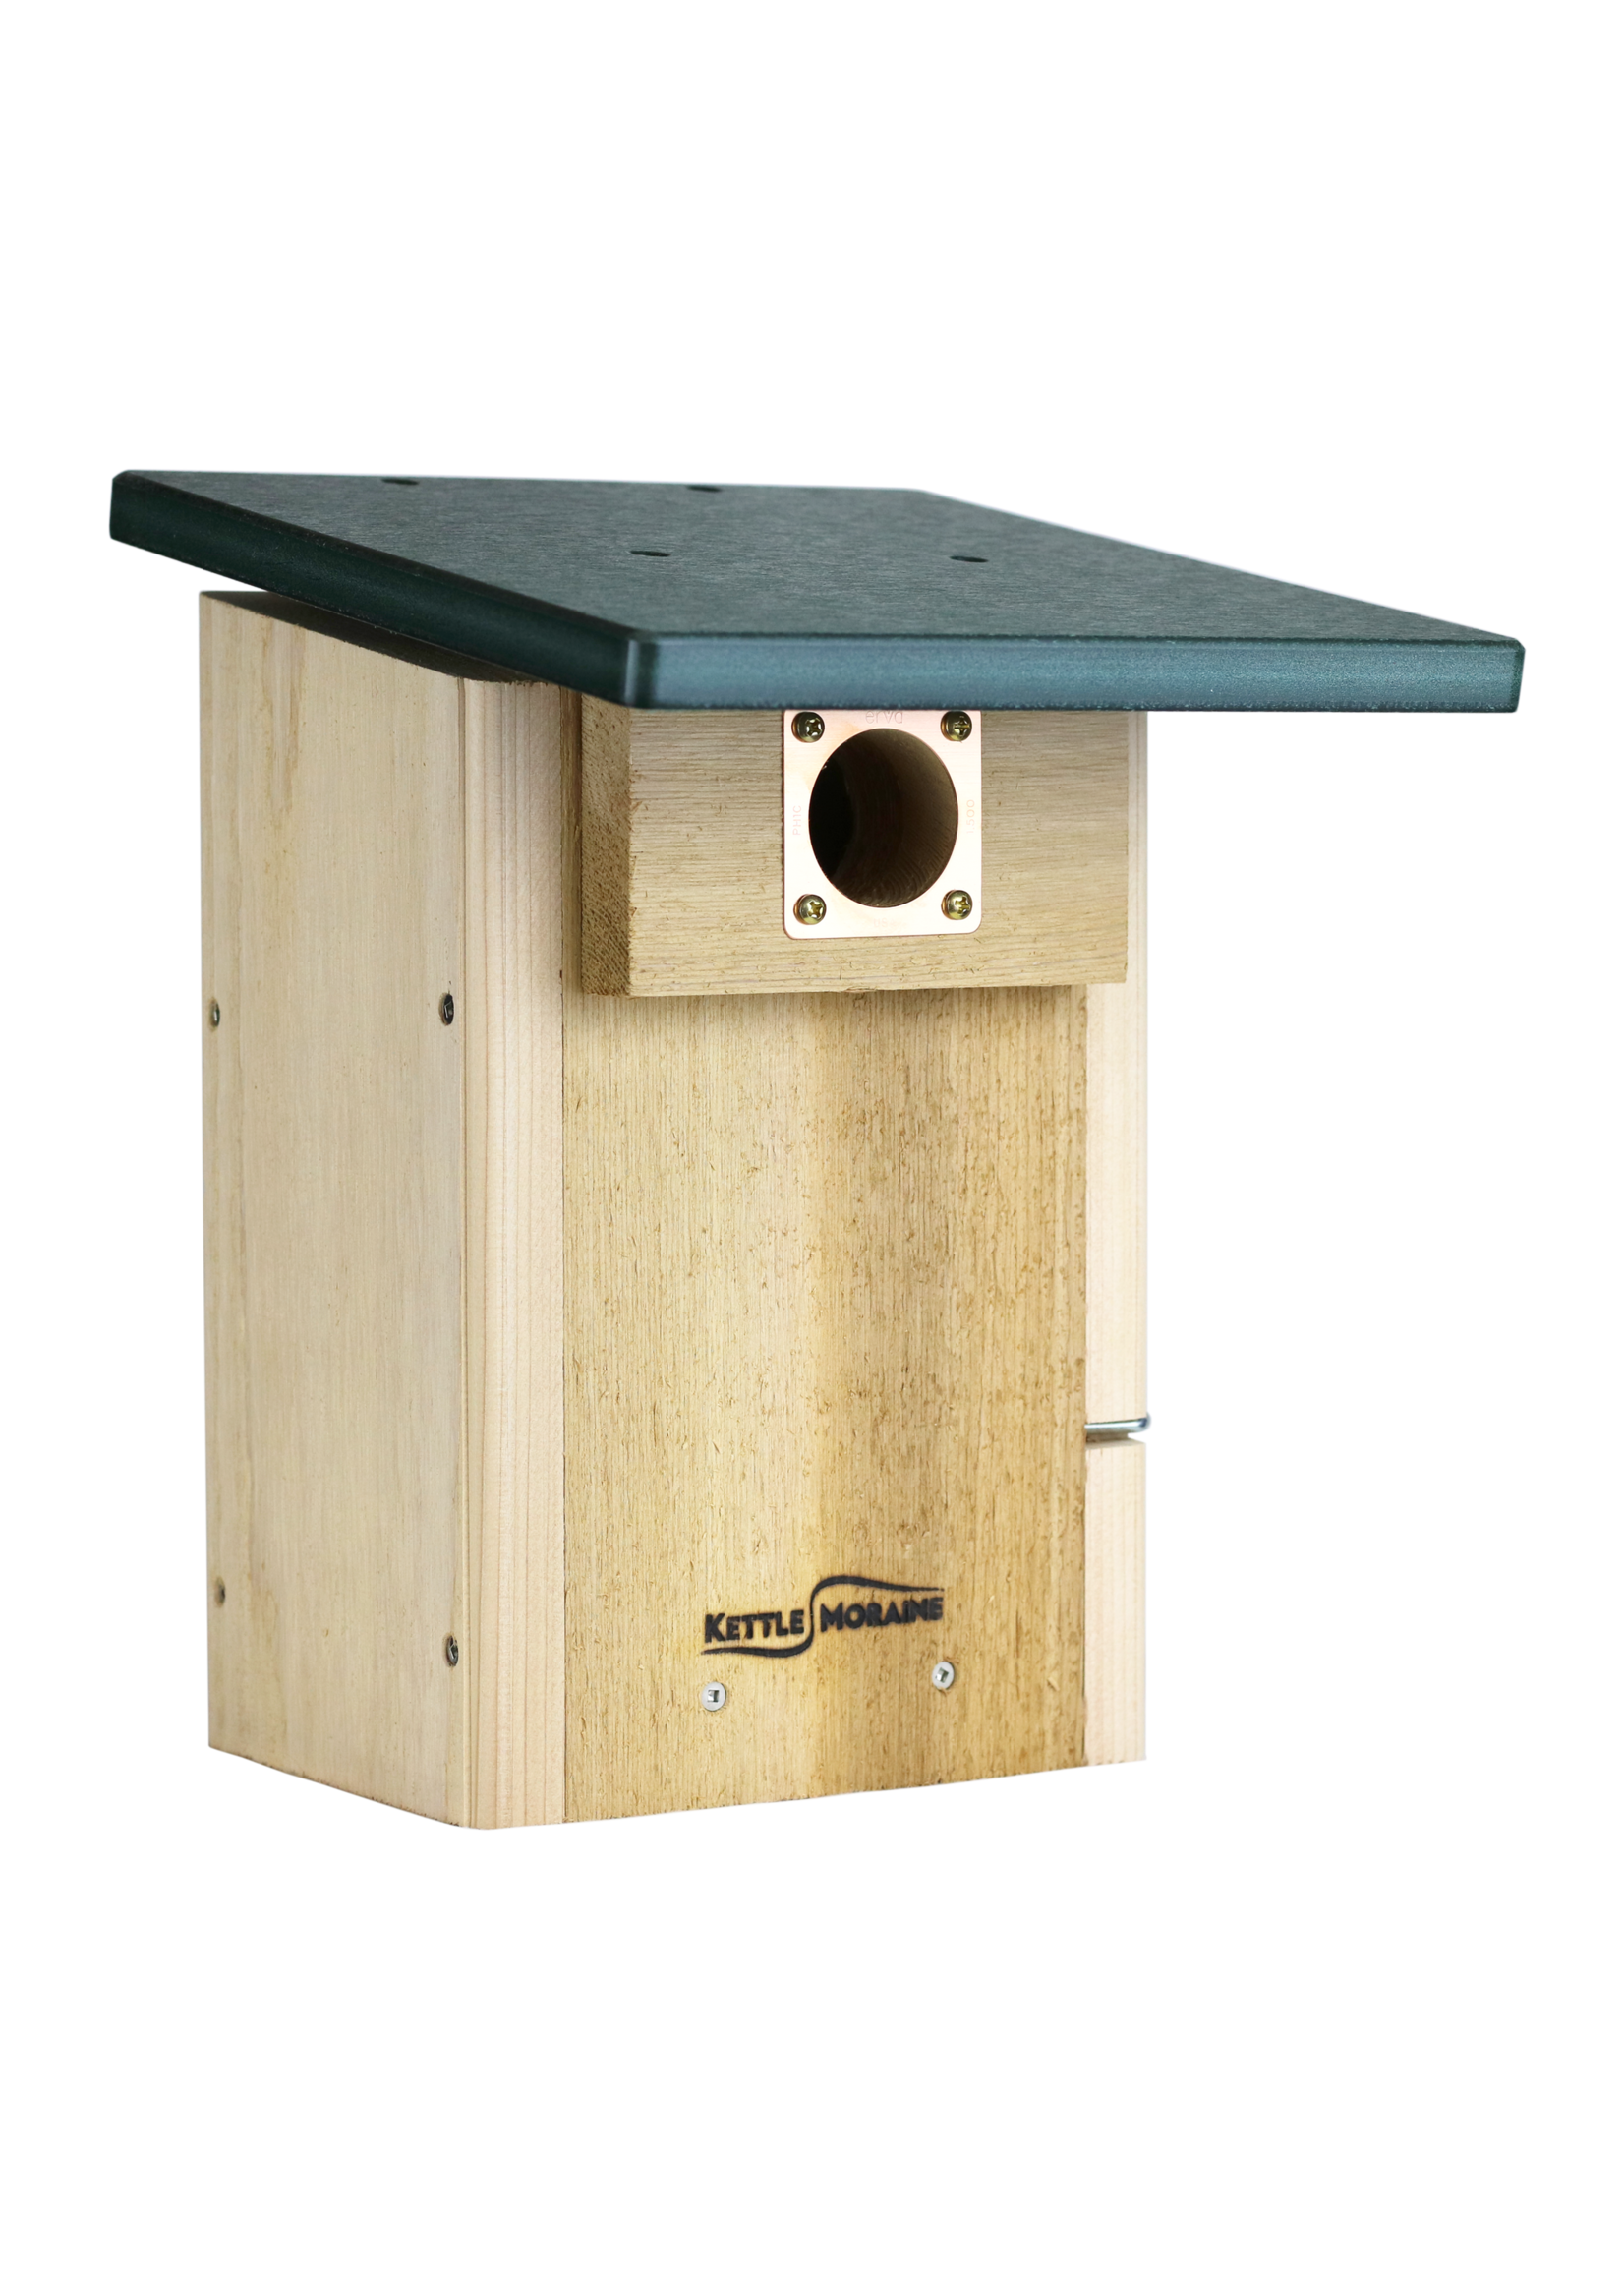 Kettle Moraine Super Bluebird Nest Box